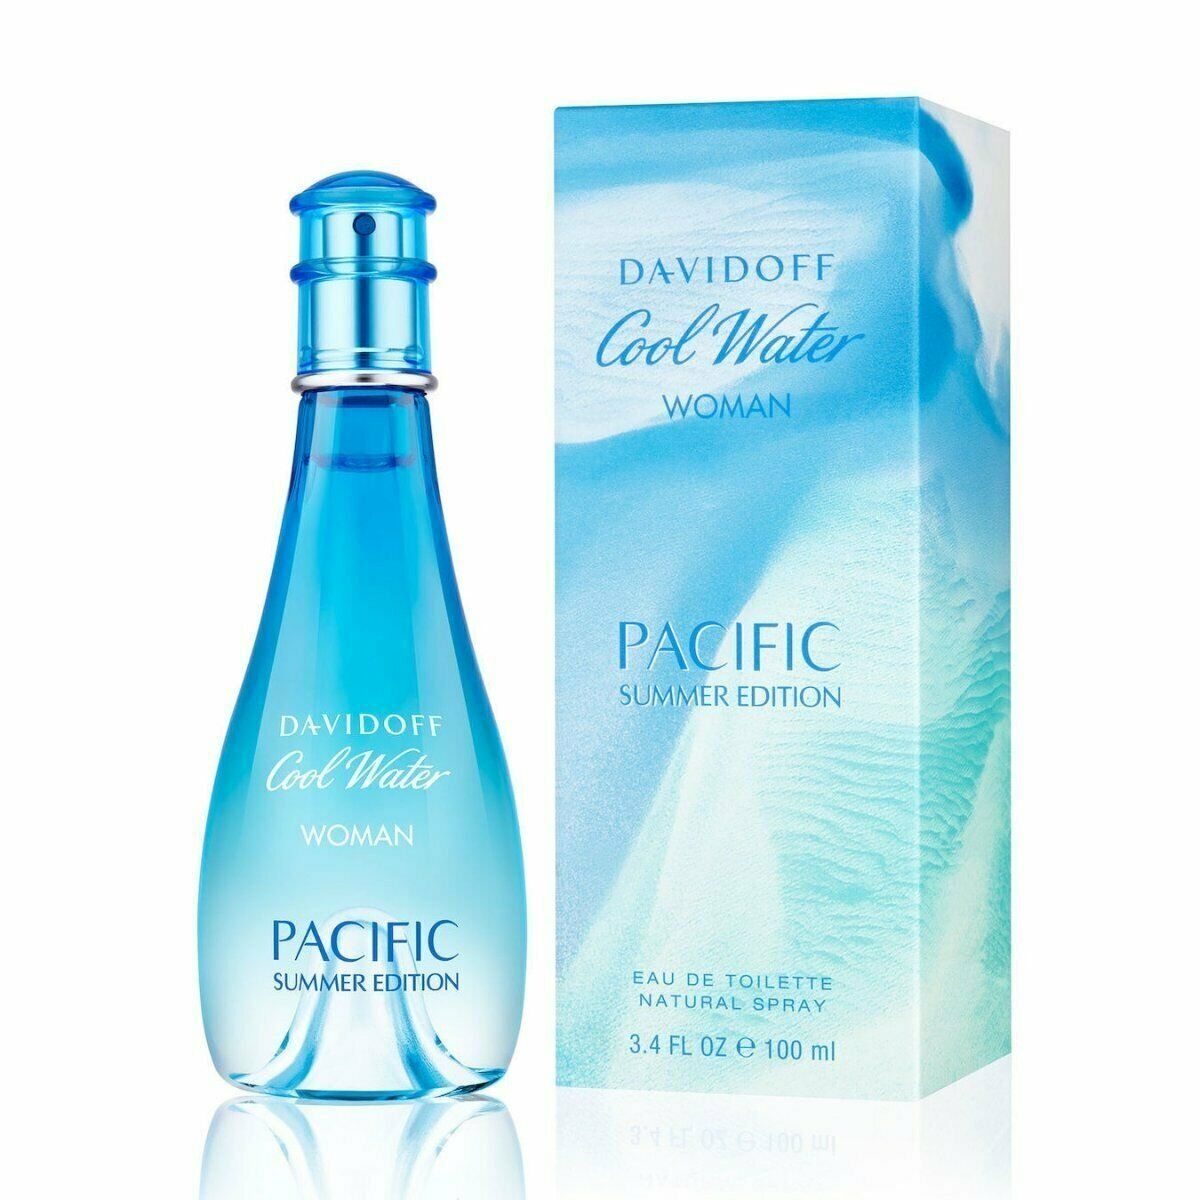 Davidoff Cool Water Pacific Summer Edition 2017 3.4 oz EDT Spray Womens Perfume